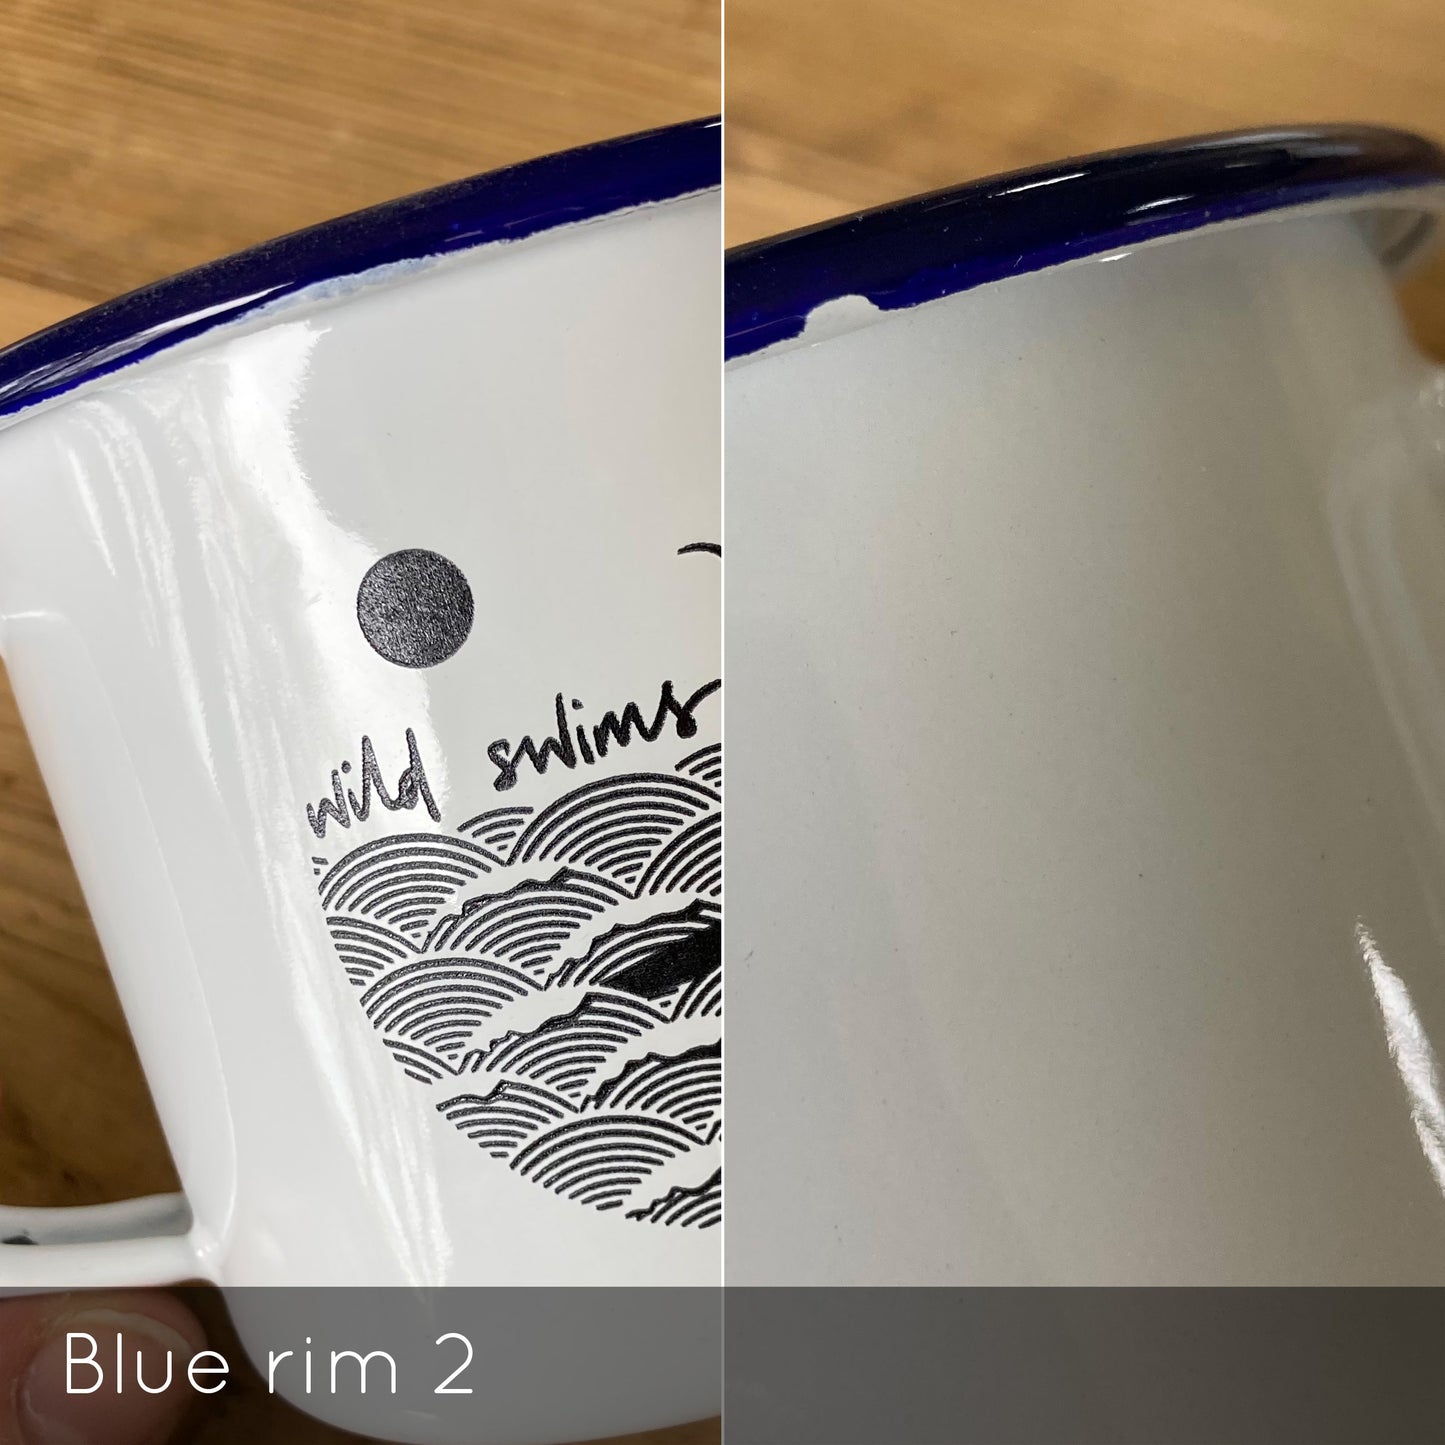 Slight seconds | 'Wild swims' enamel mugs